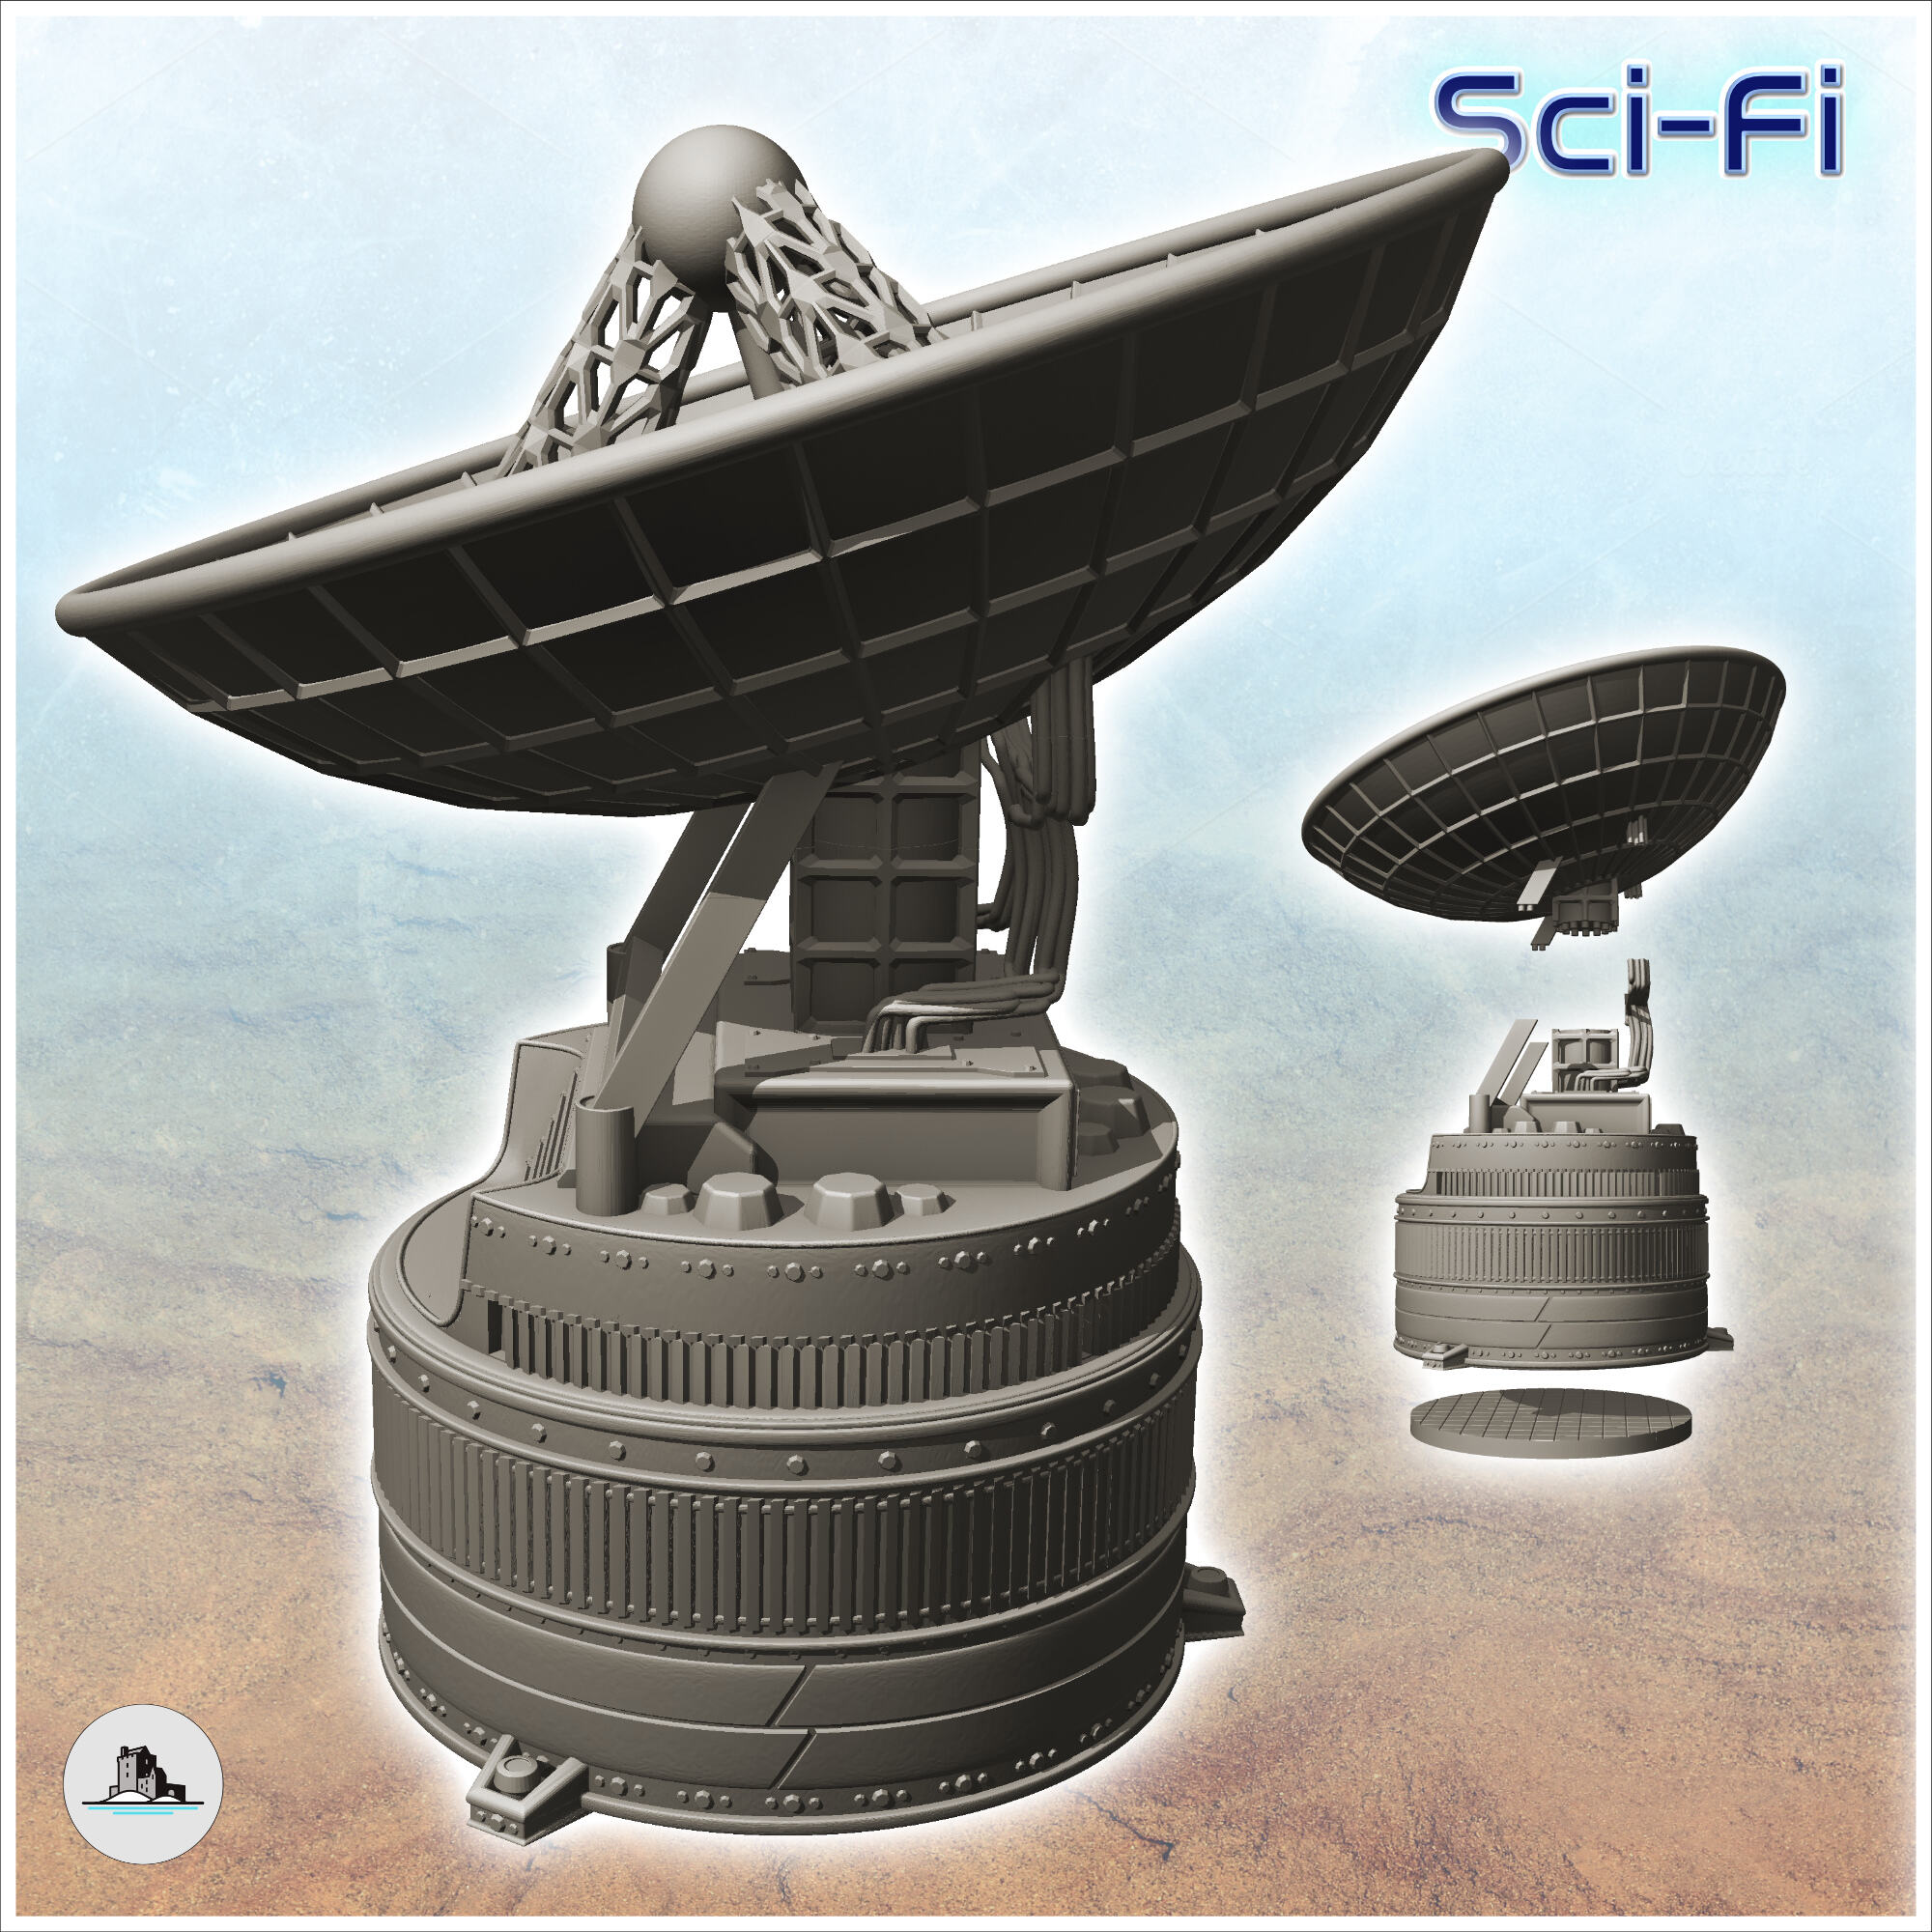 Circular antenna - Terrain Scifi Science fiction SF